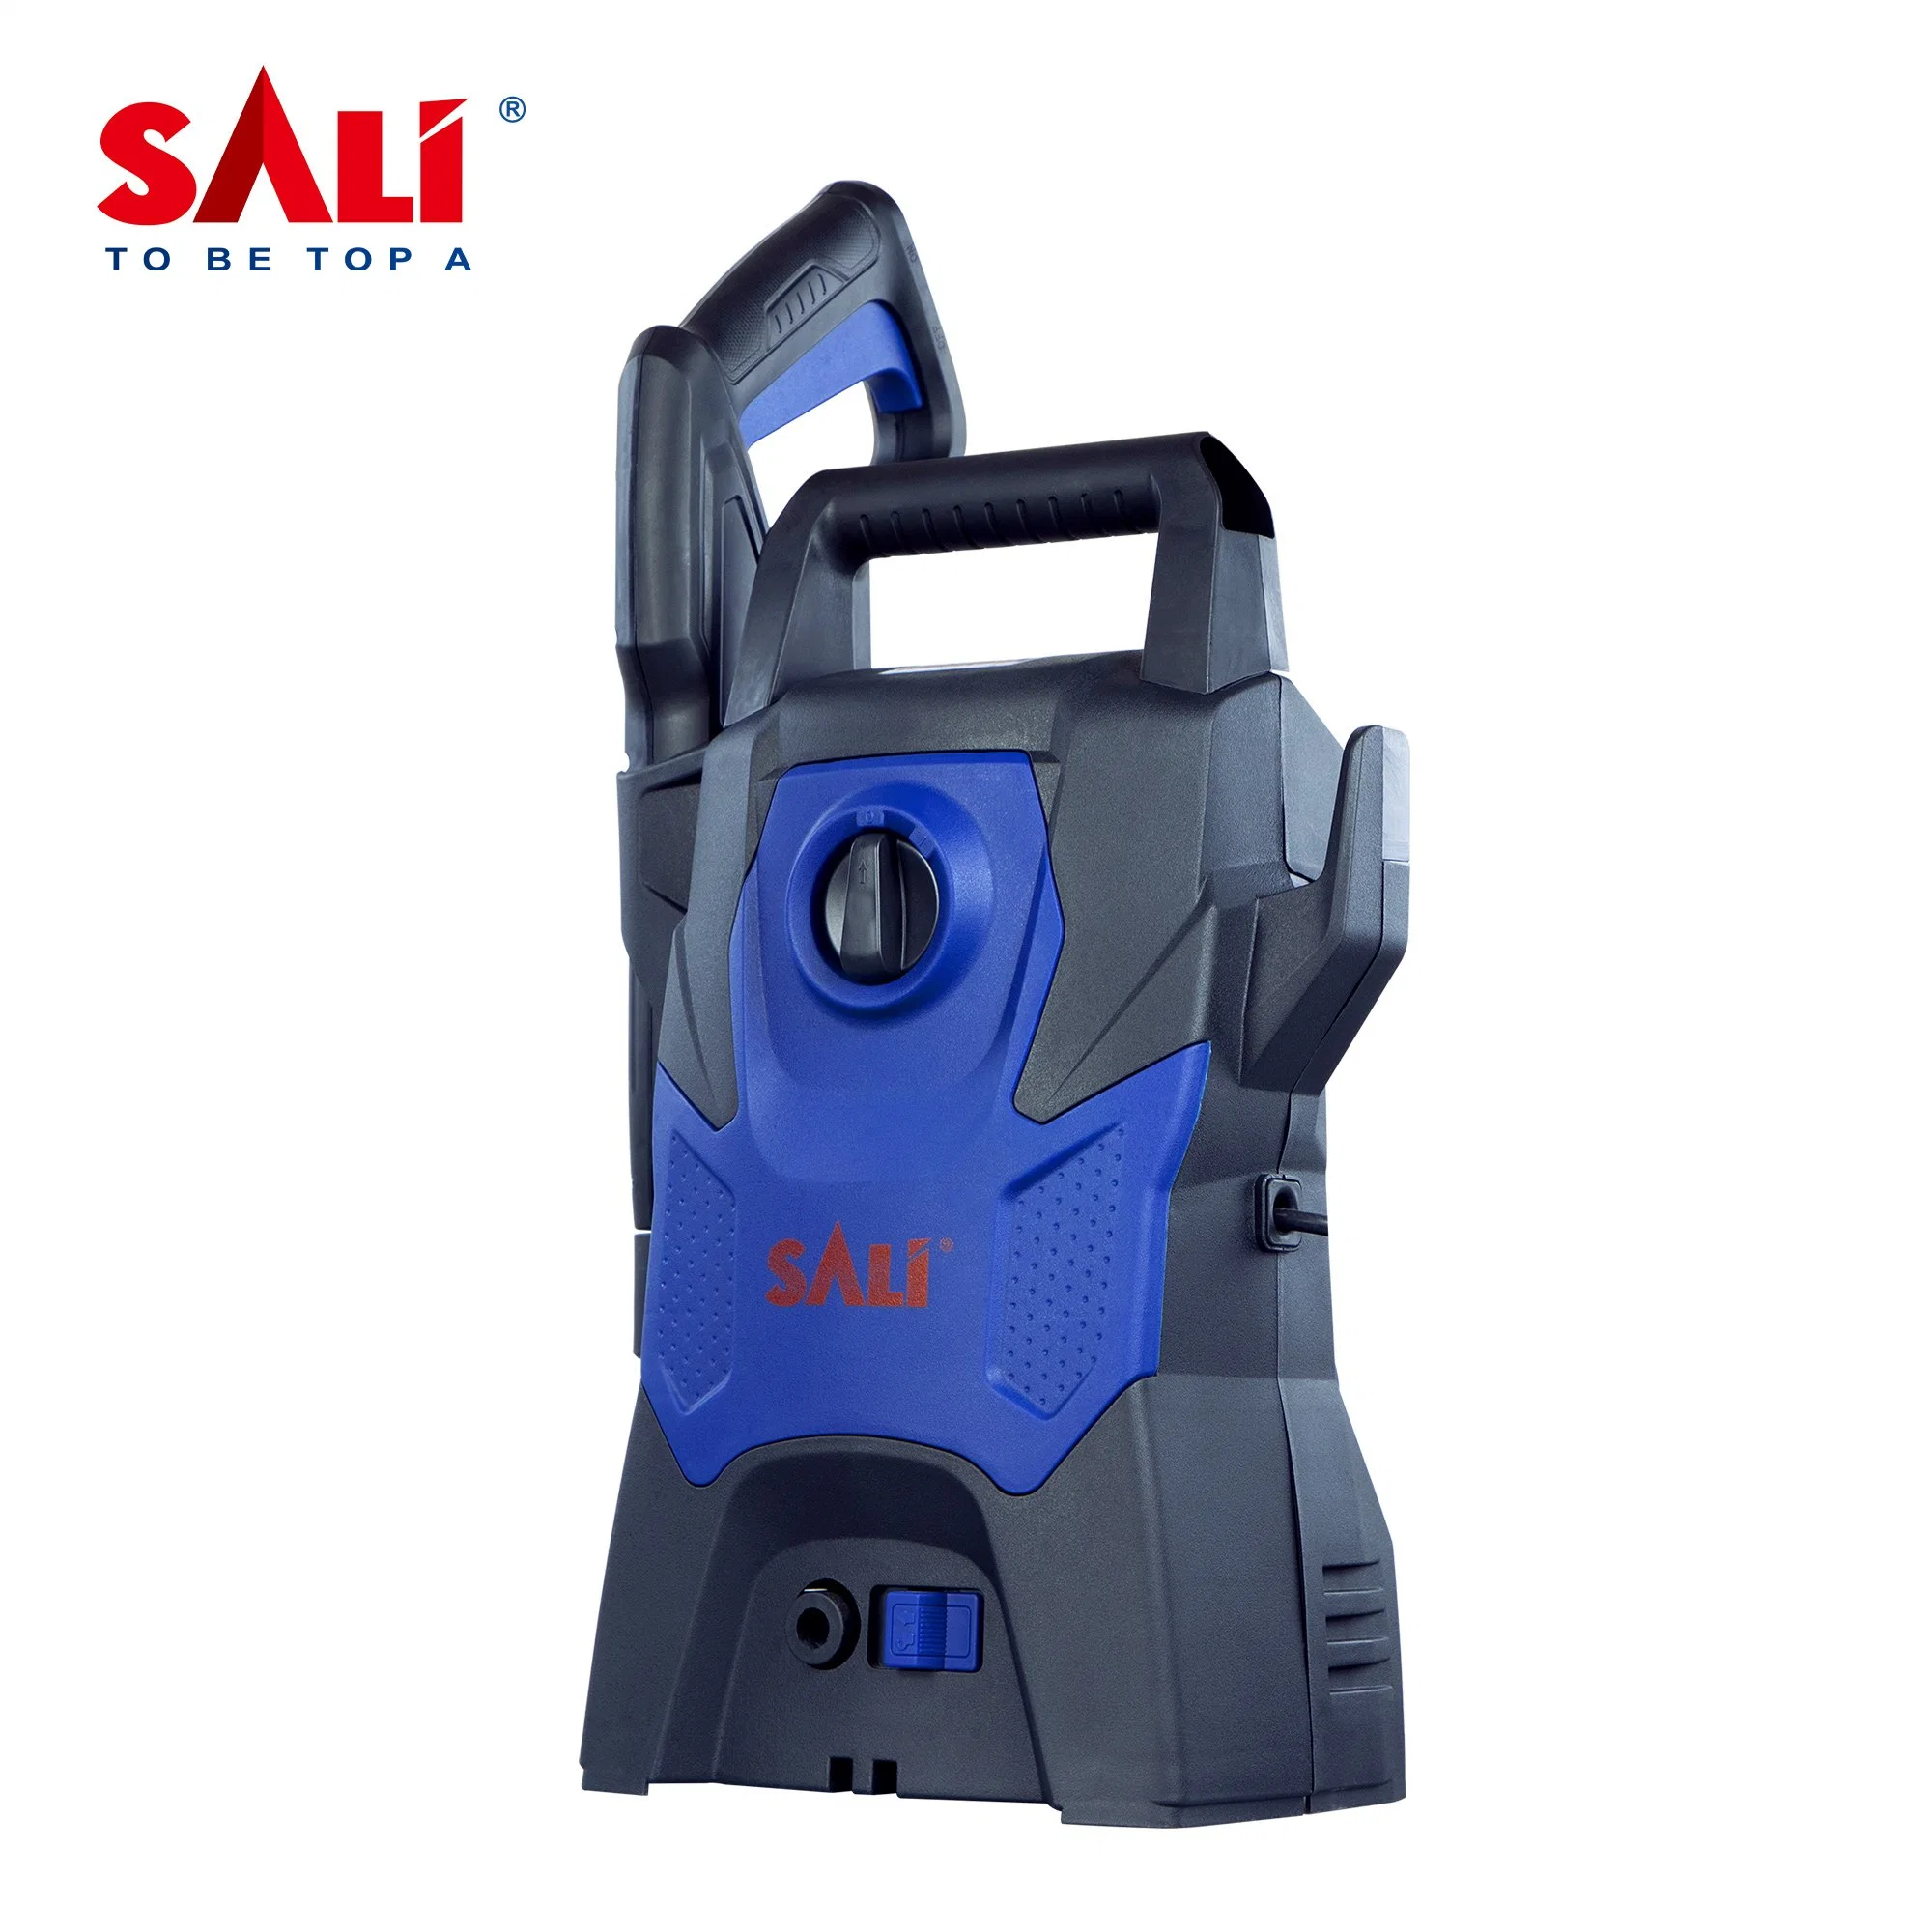 Sali New Item High-Pressure Cleaner